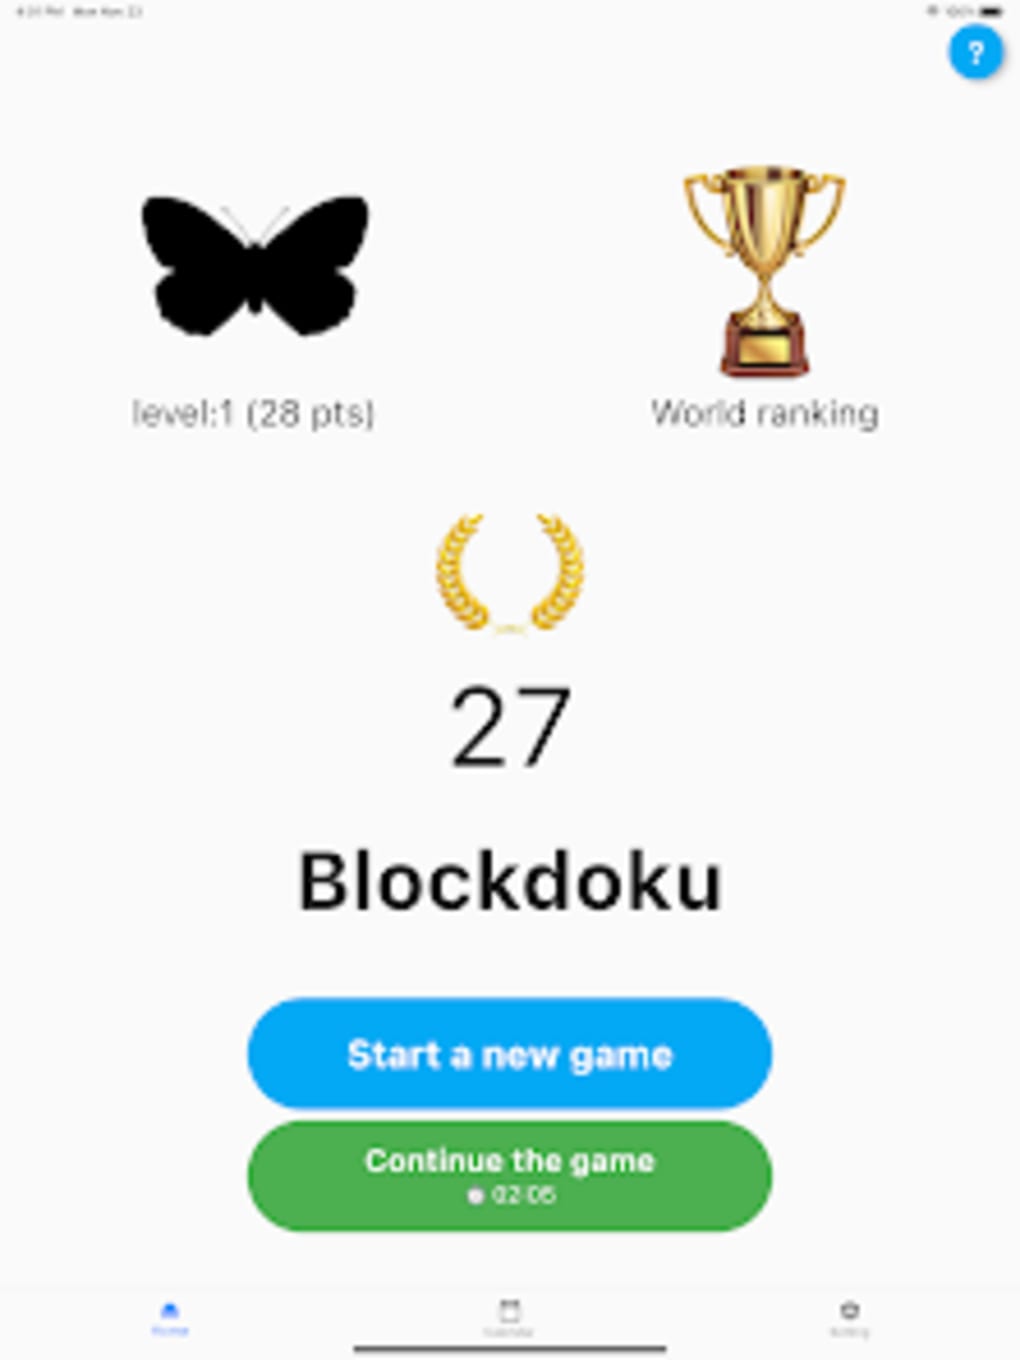 Blockdoku - Sudoku Block pour Android - Télécharger